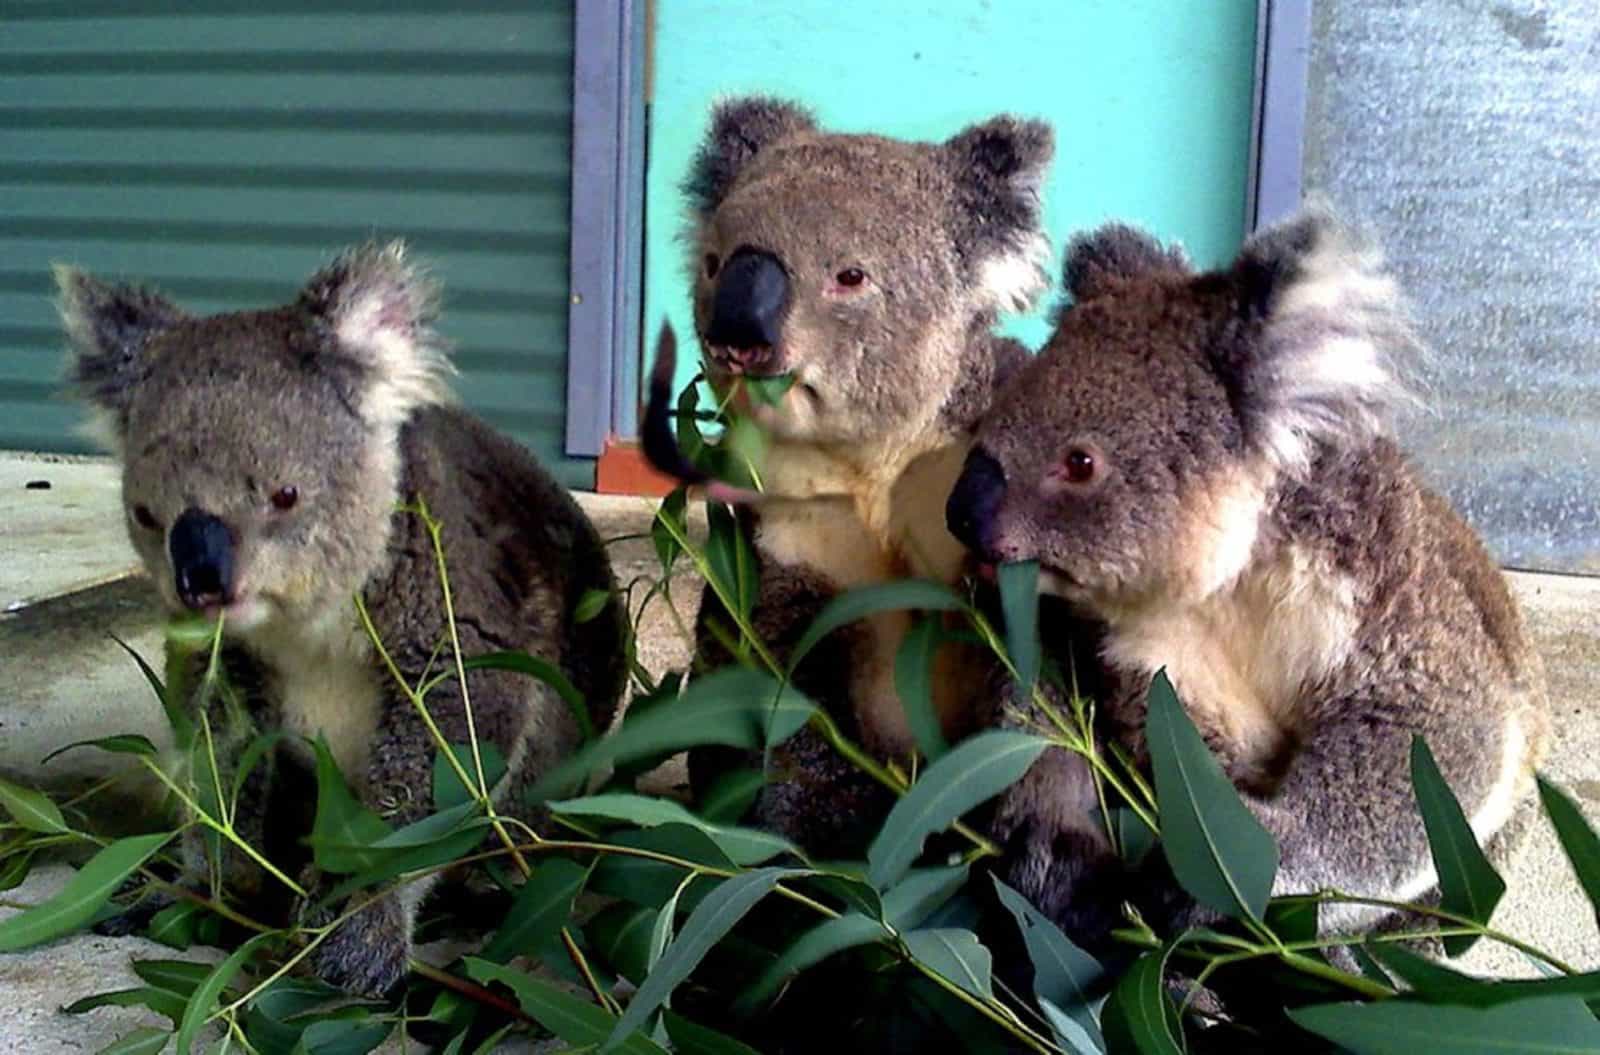 Cohunu Koala Park, Byford, Western Australia